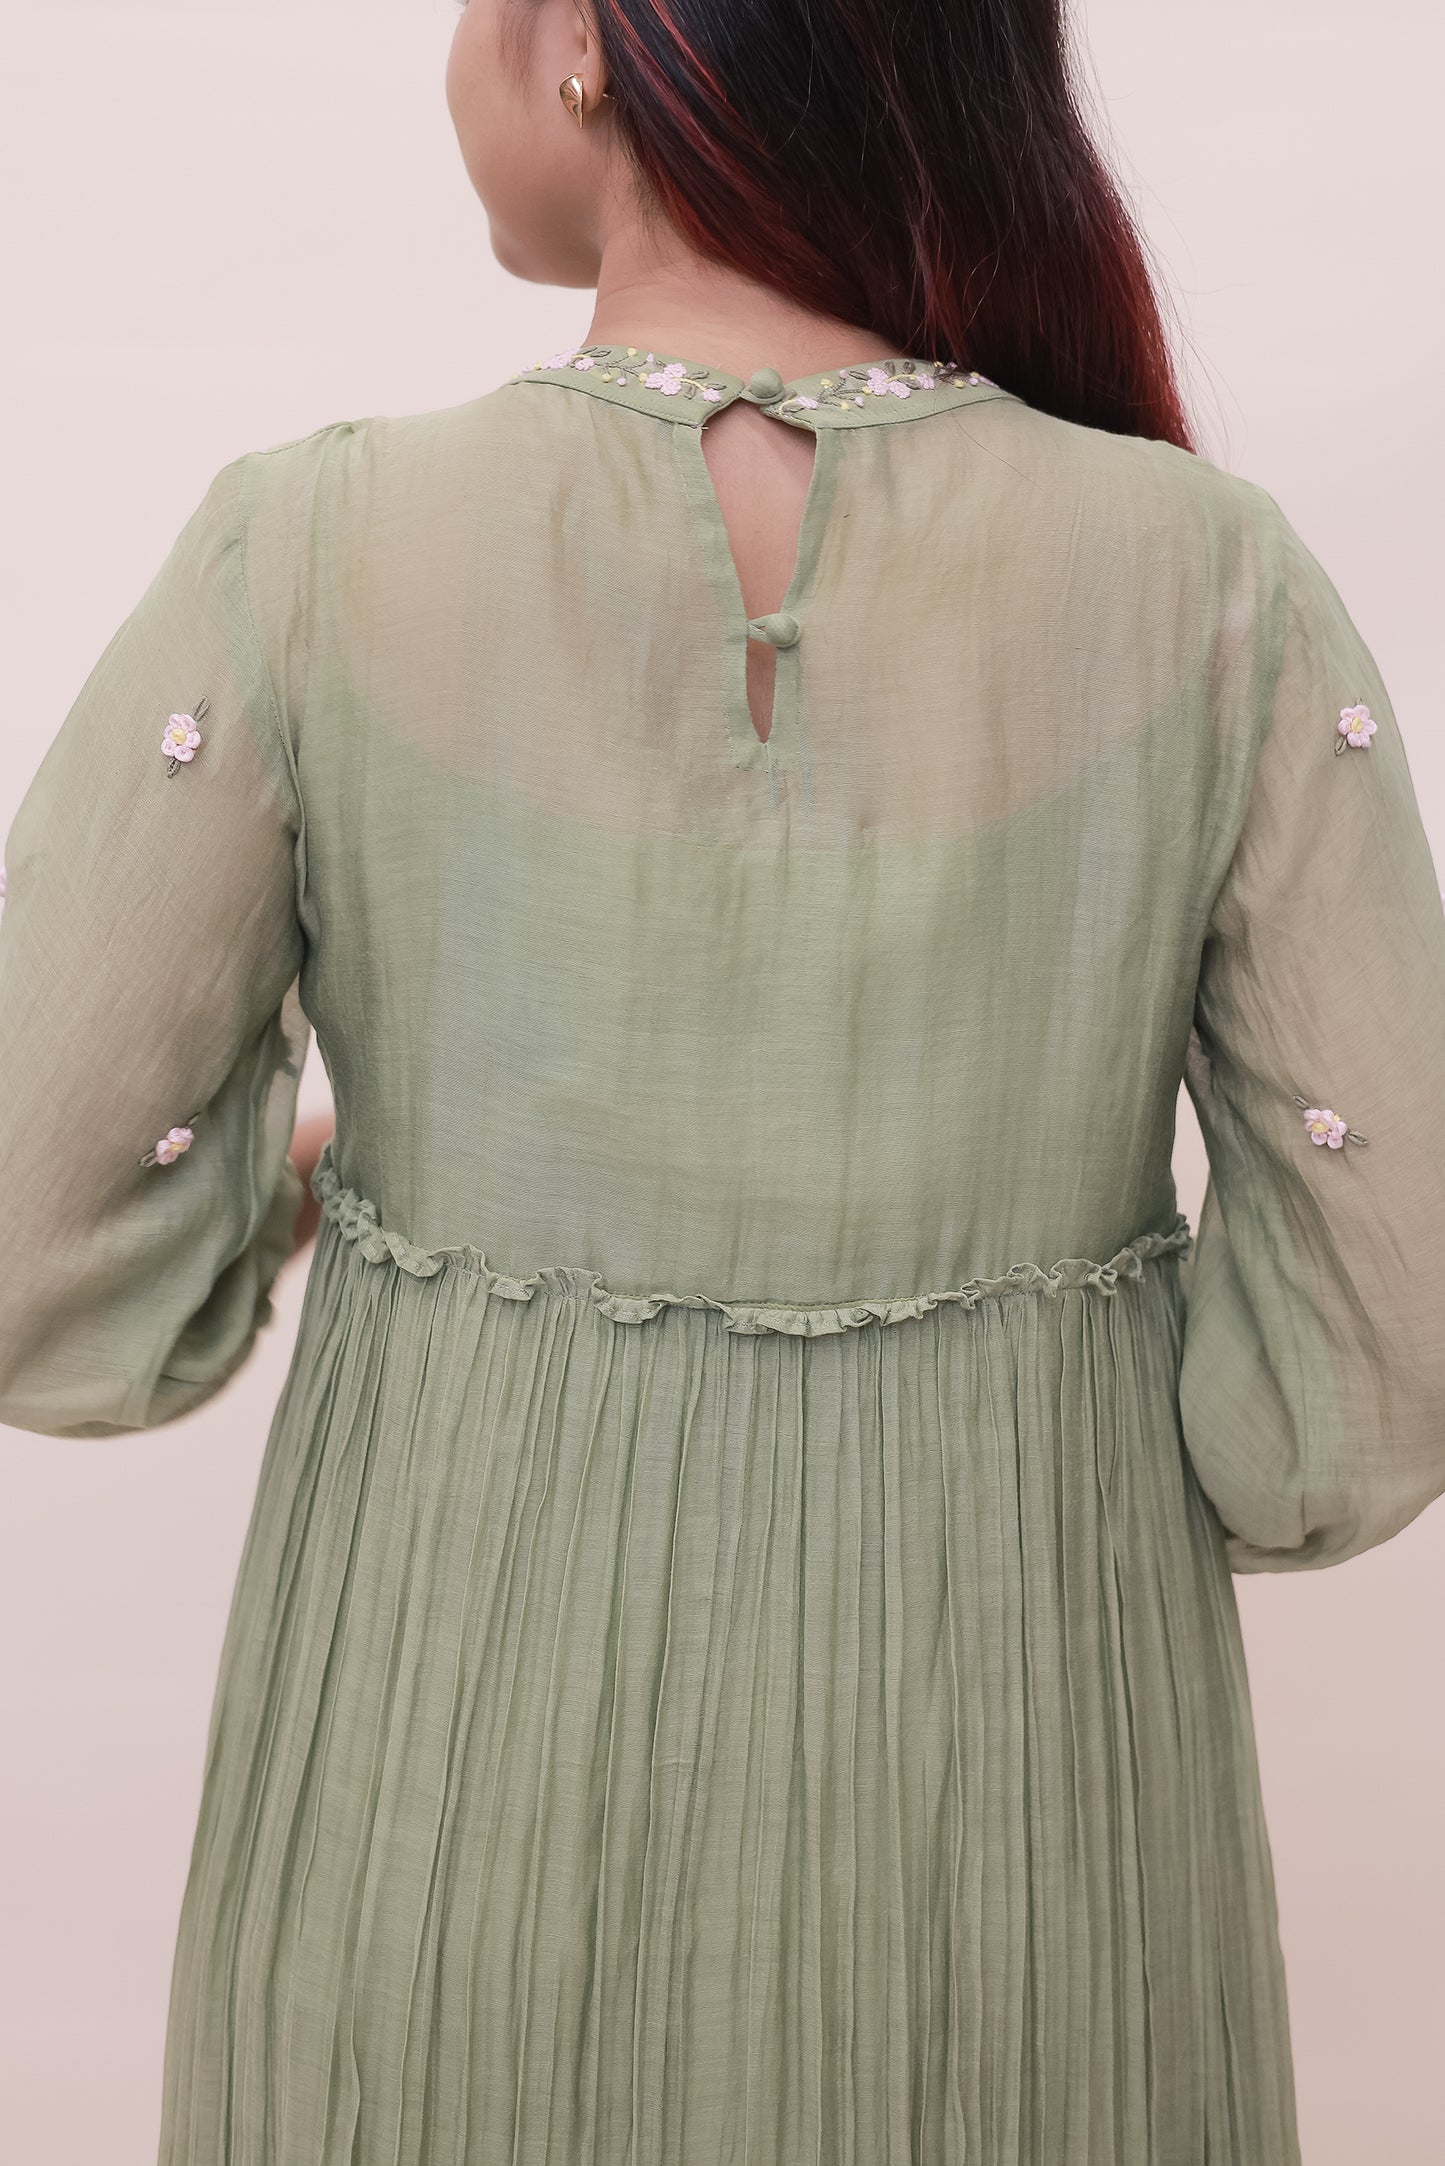 Pastel green tier dress